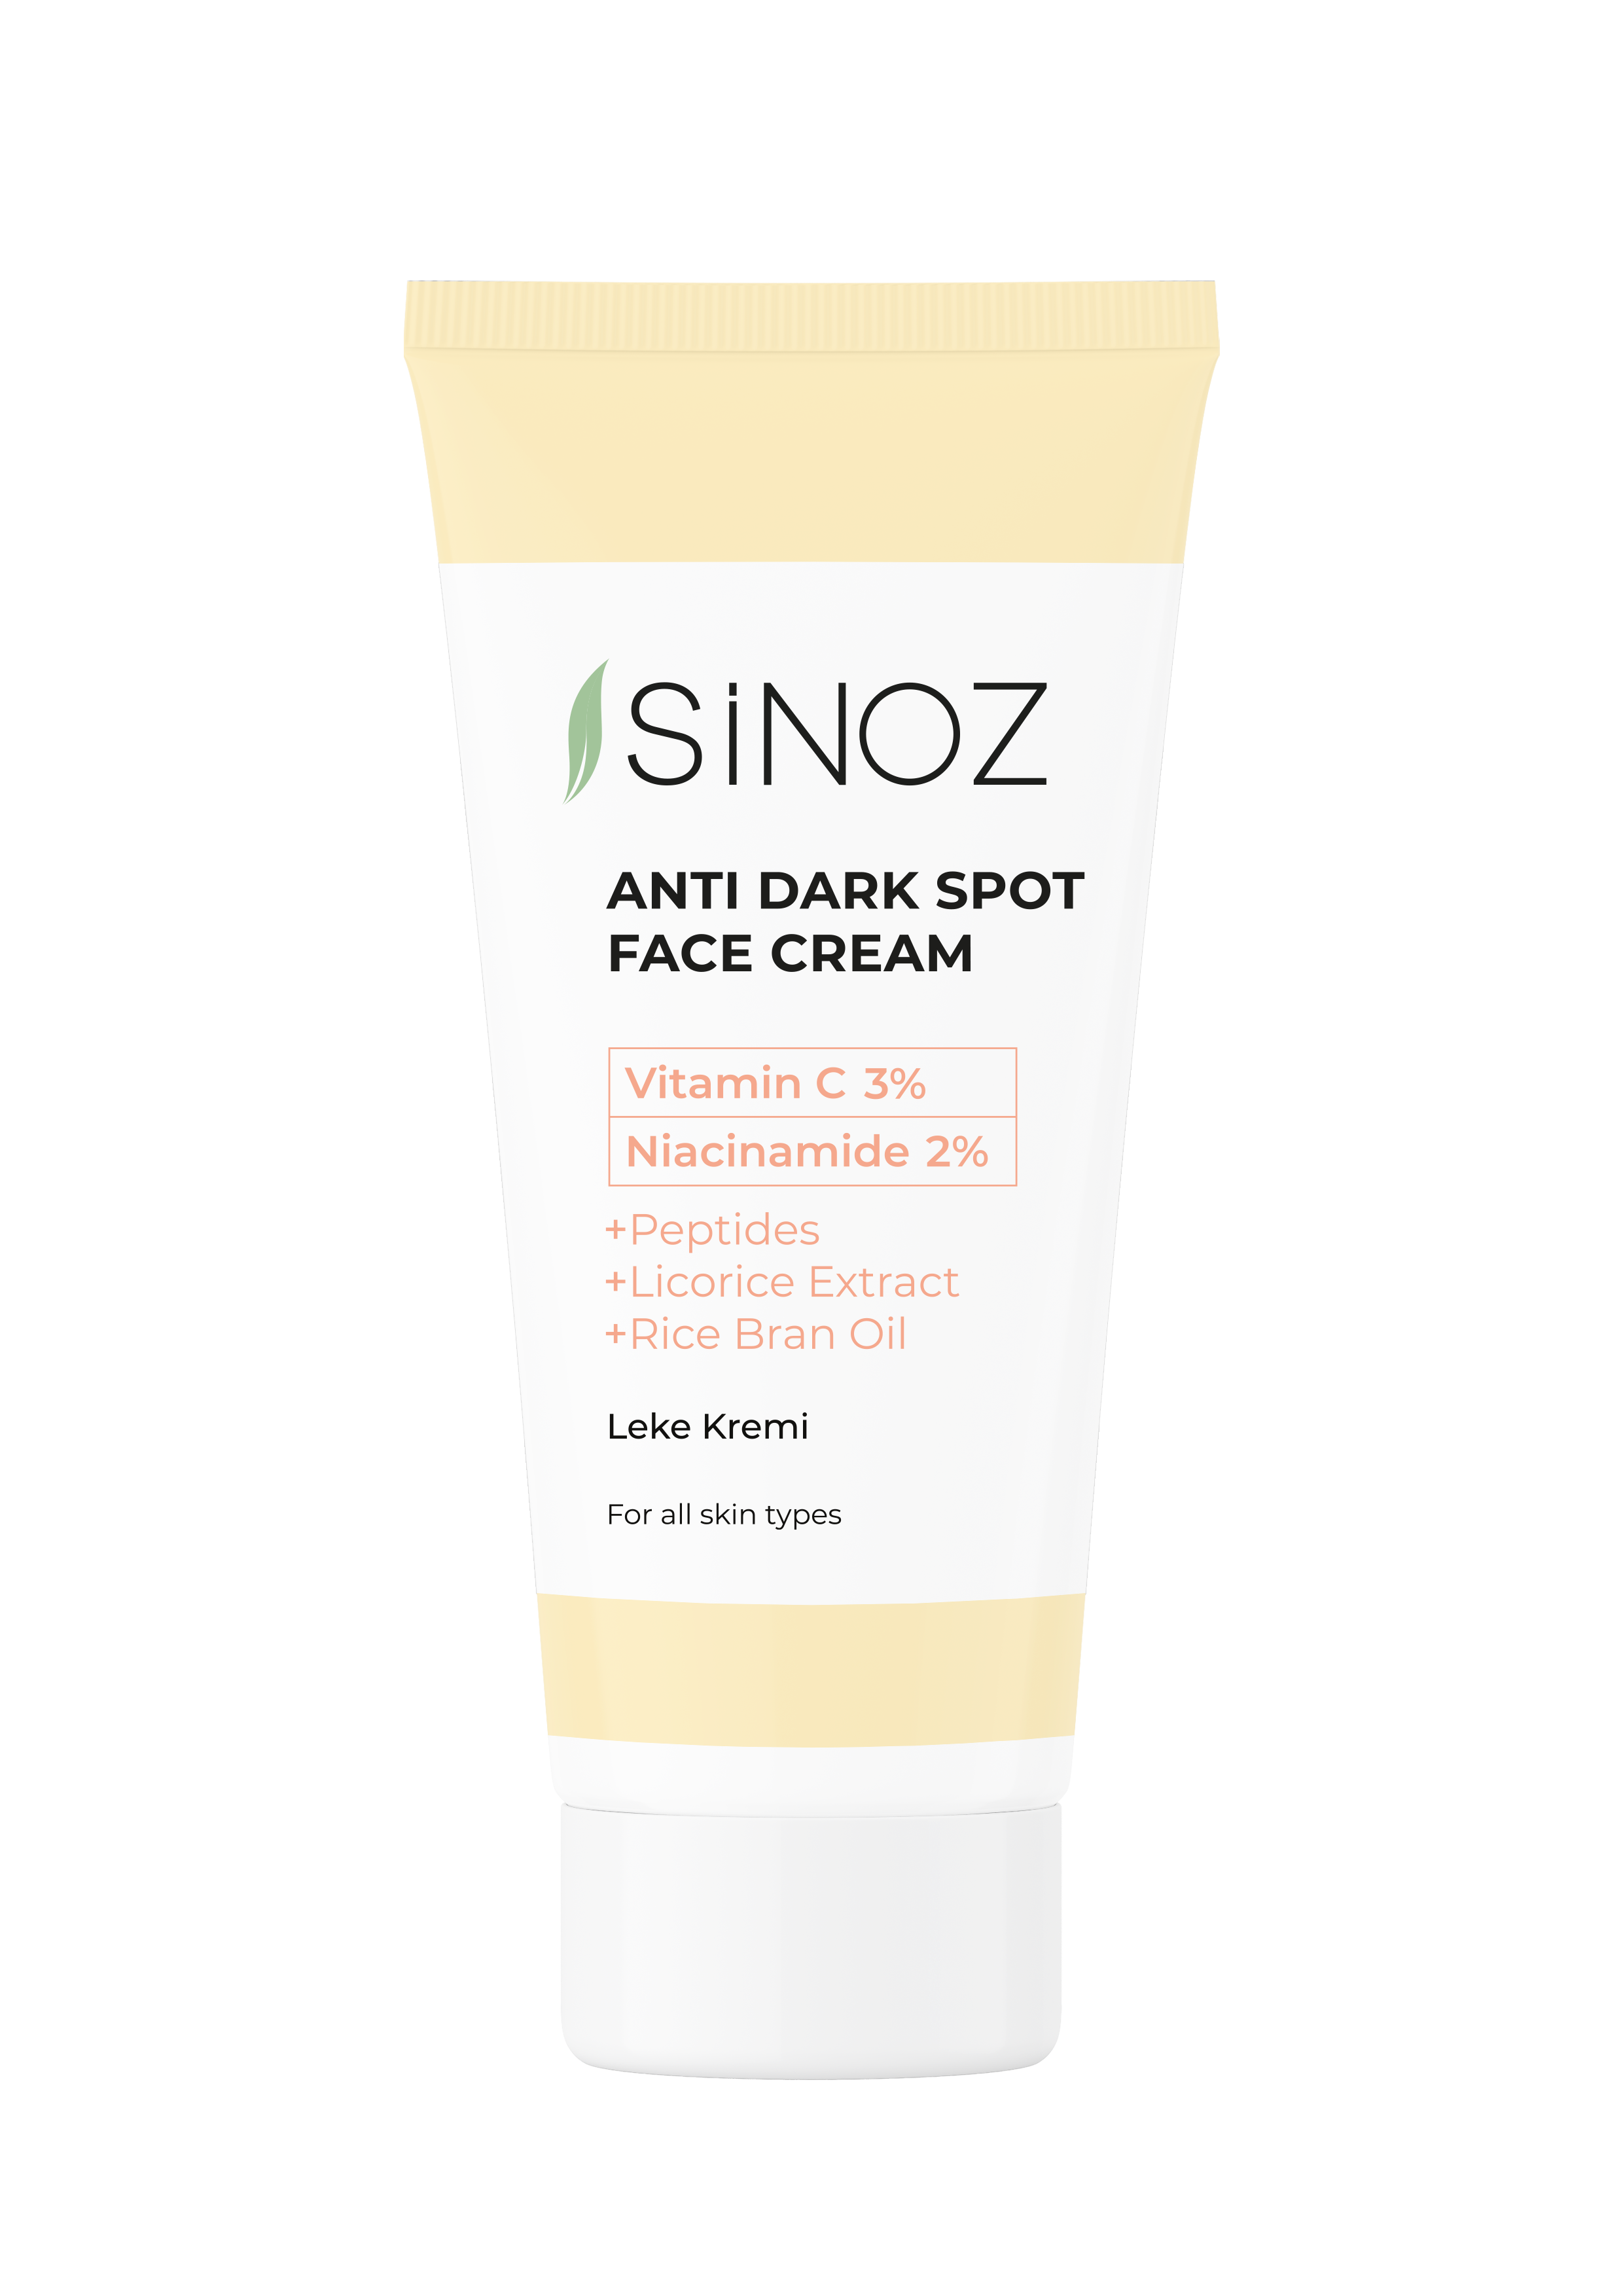 Sinoz Anti-Dark Spot Face Cream